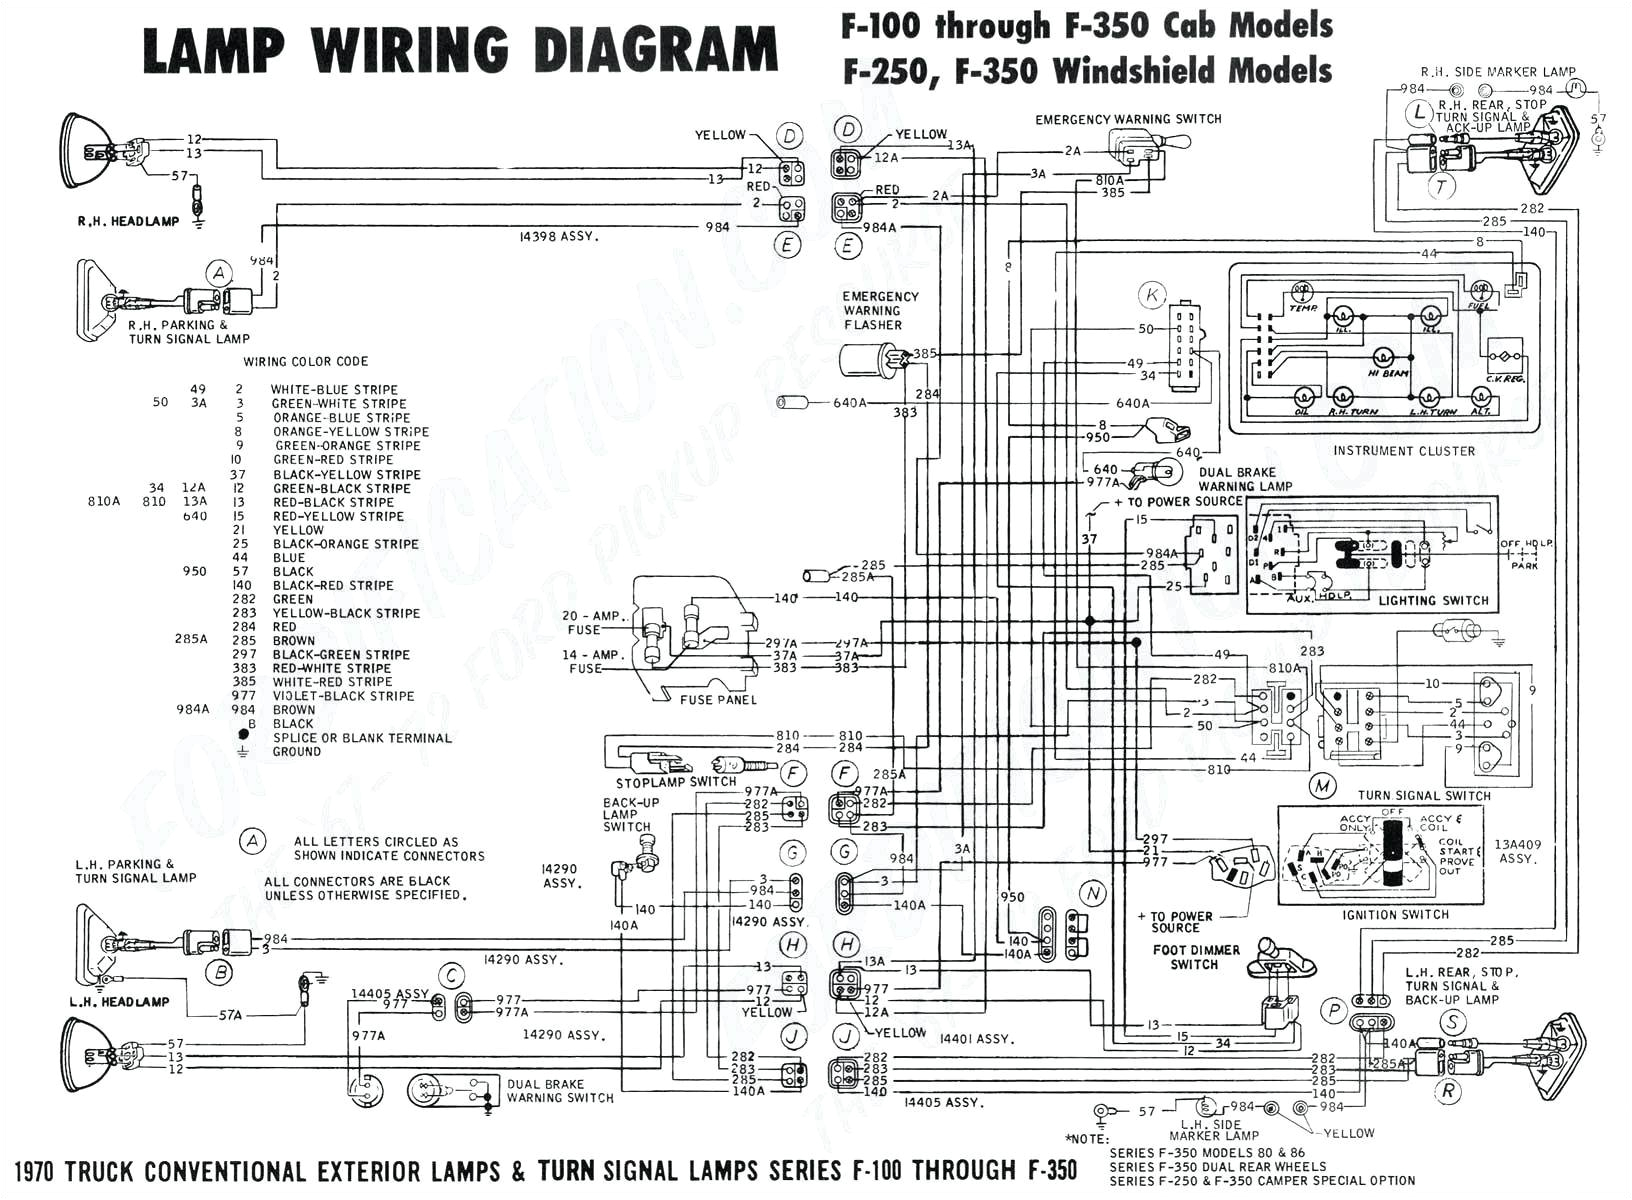 Electric Rc Plane Wiring Diagram Global Electric Motorcars Wiring Diagrams Wiring Diagram Perfomance